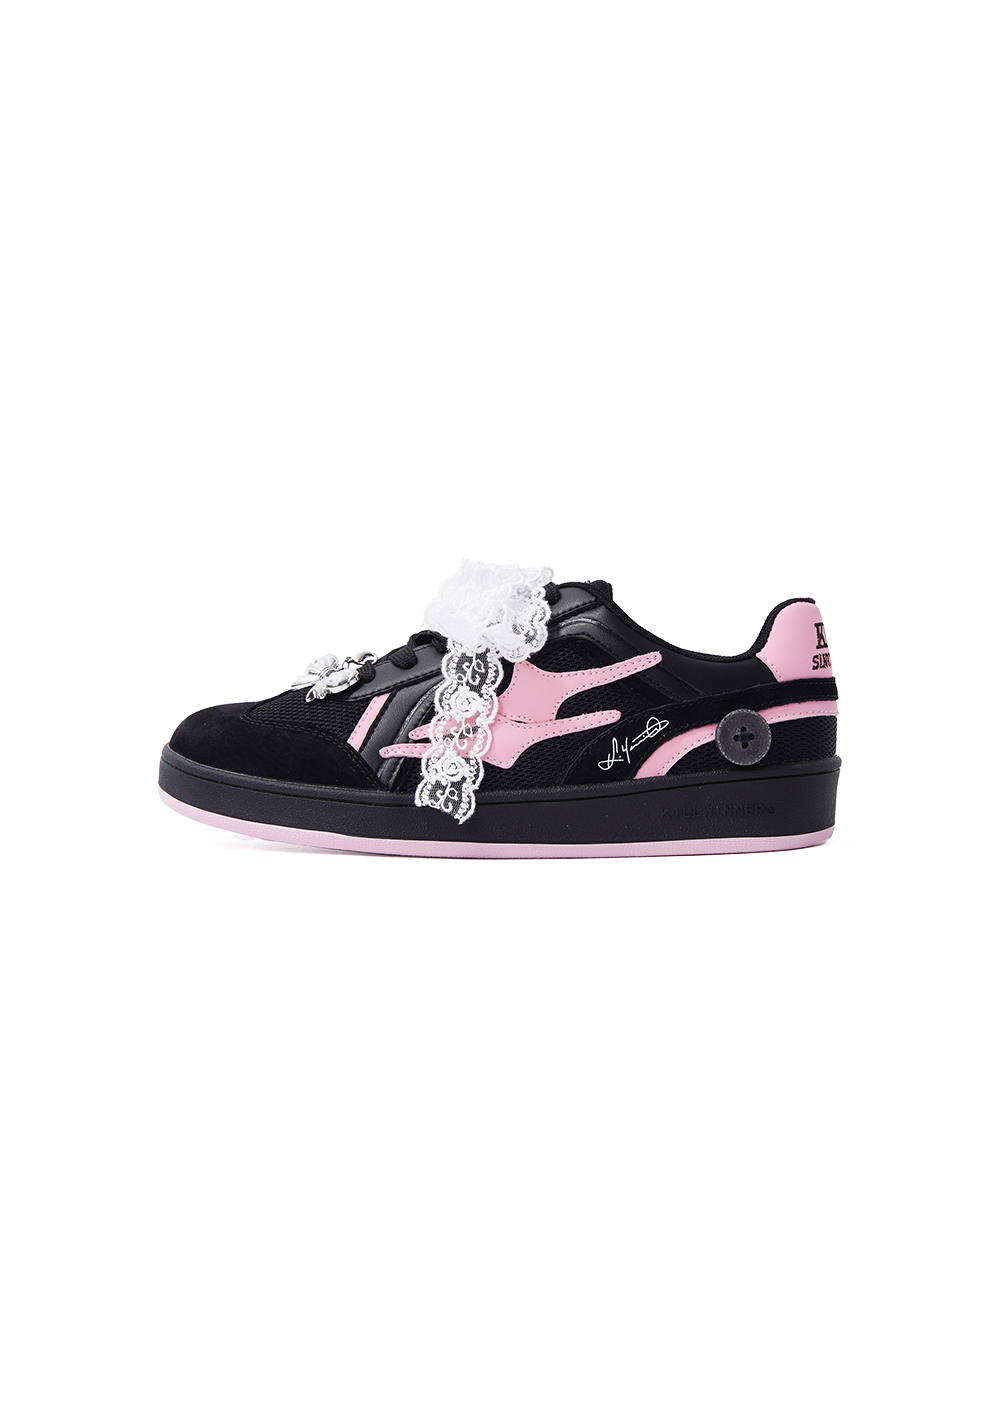 Retro Training Sneaker-Black Pink Bow